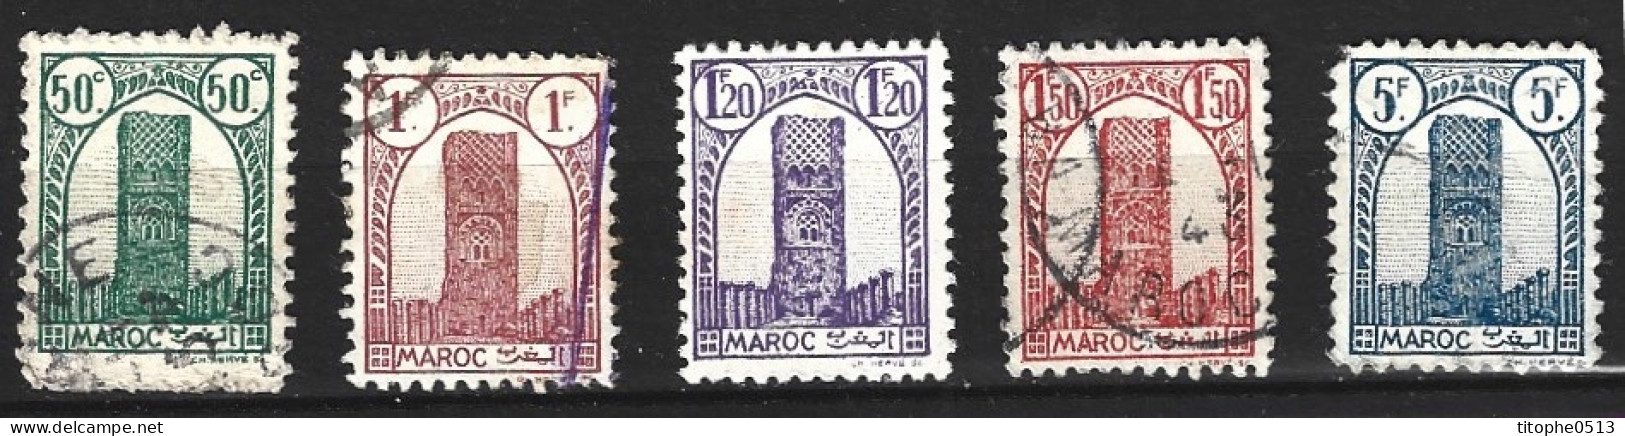 MAROC. Timbres Oblitérés De 1943-4. Tour Hassan. - Gebruikt